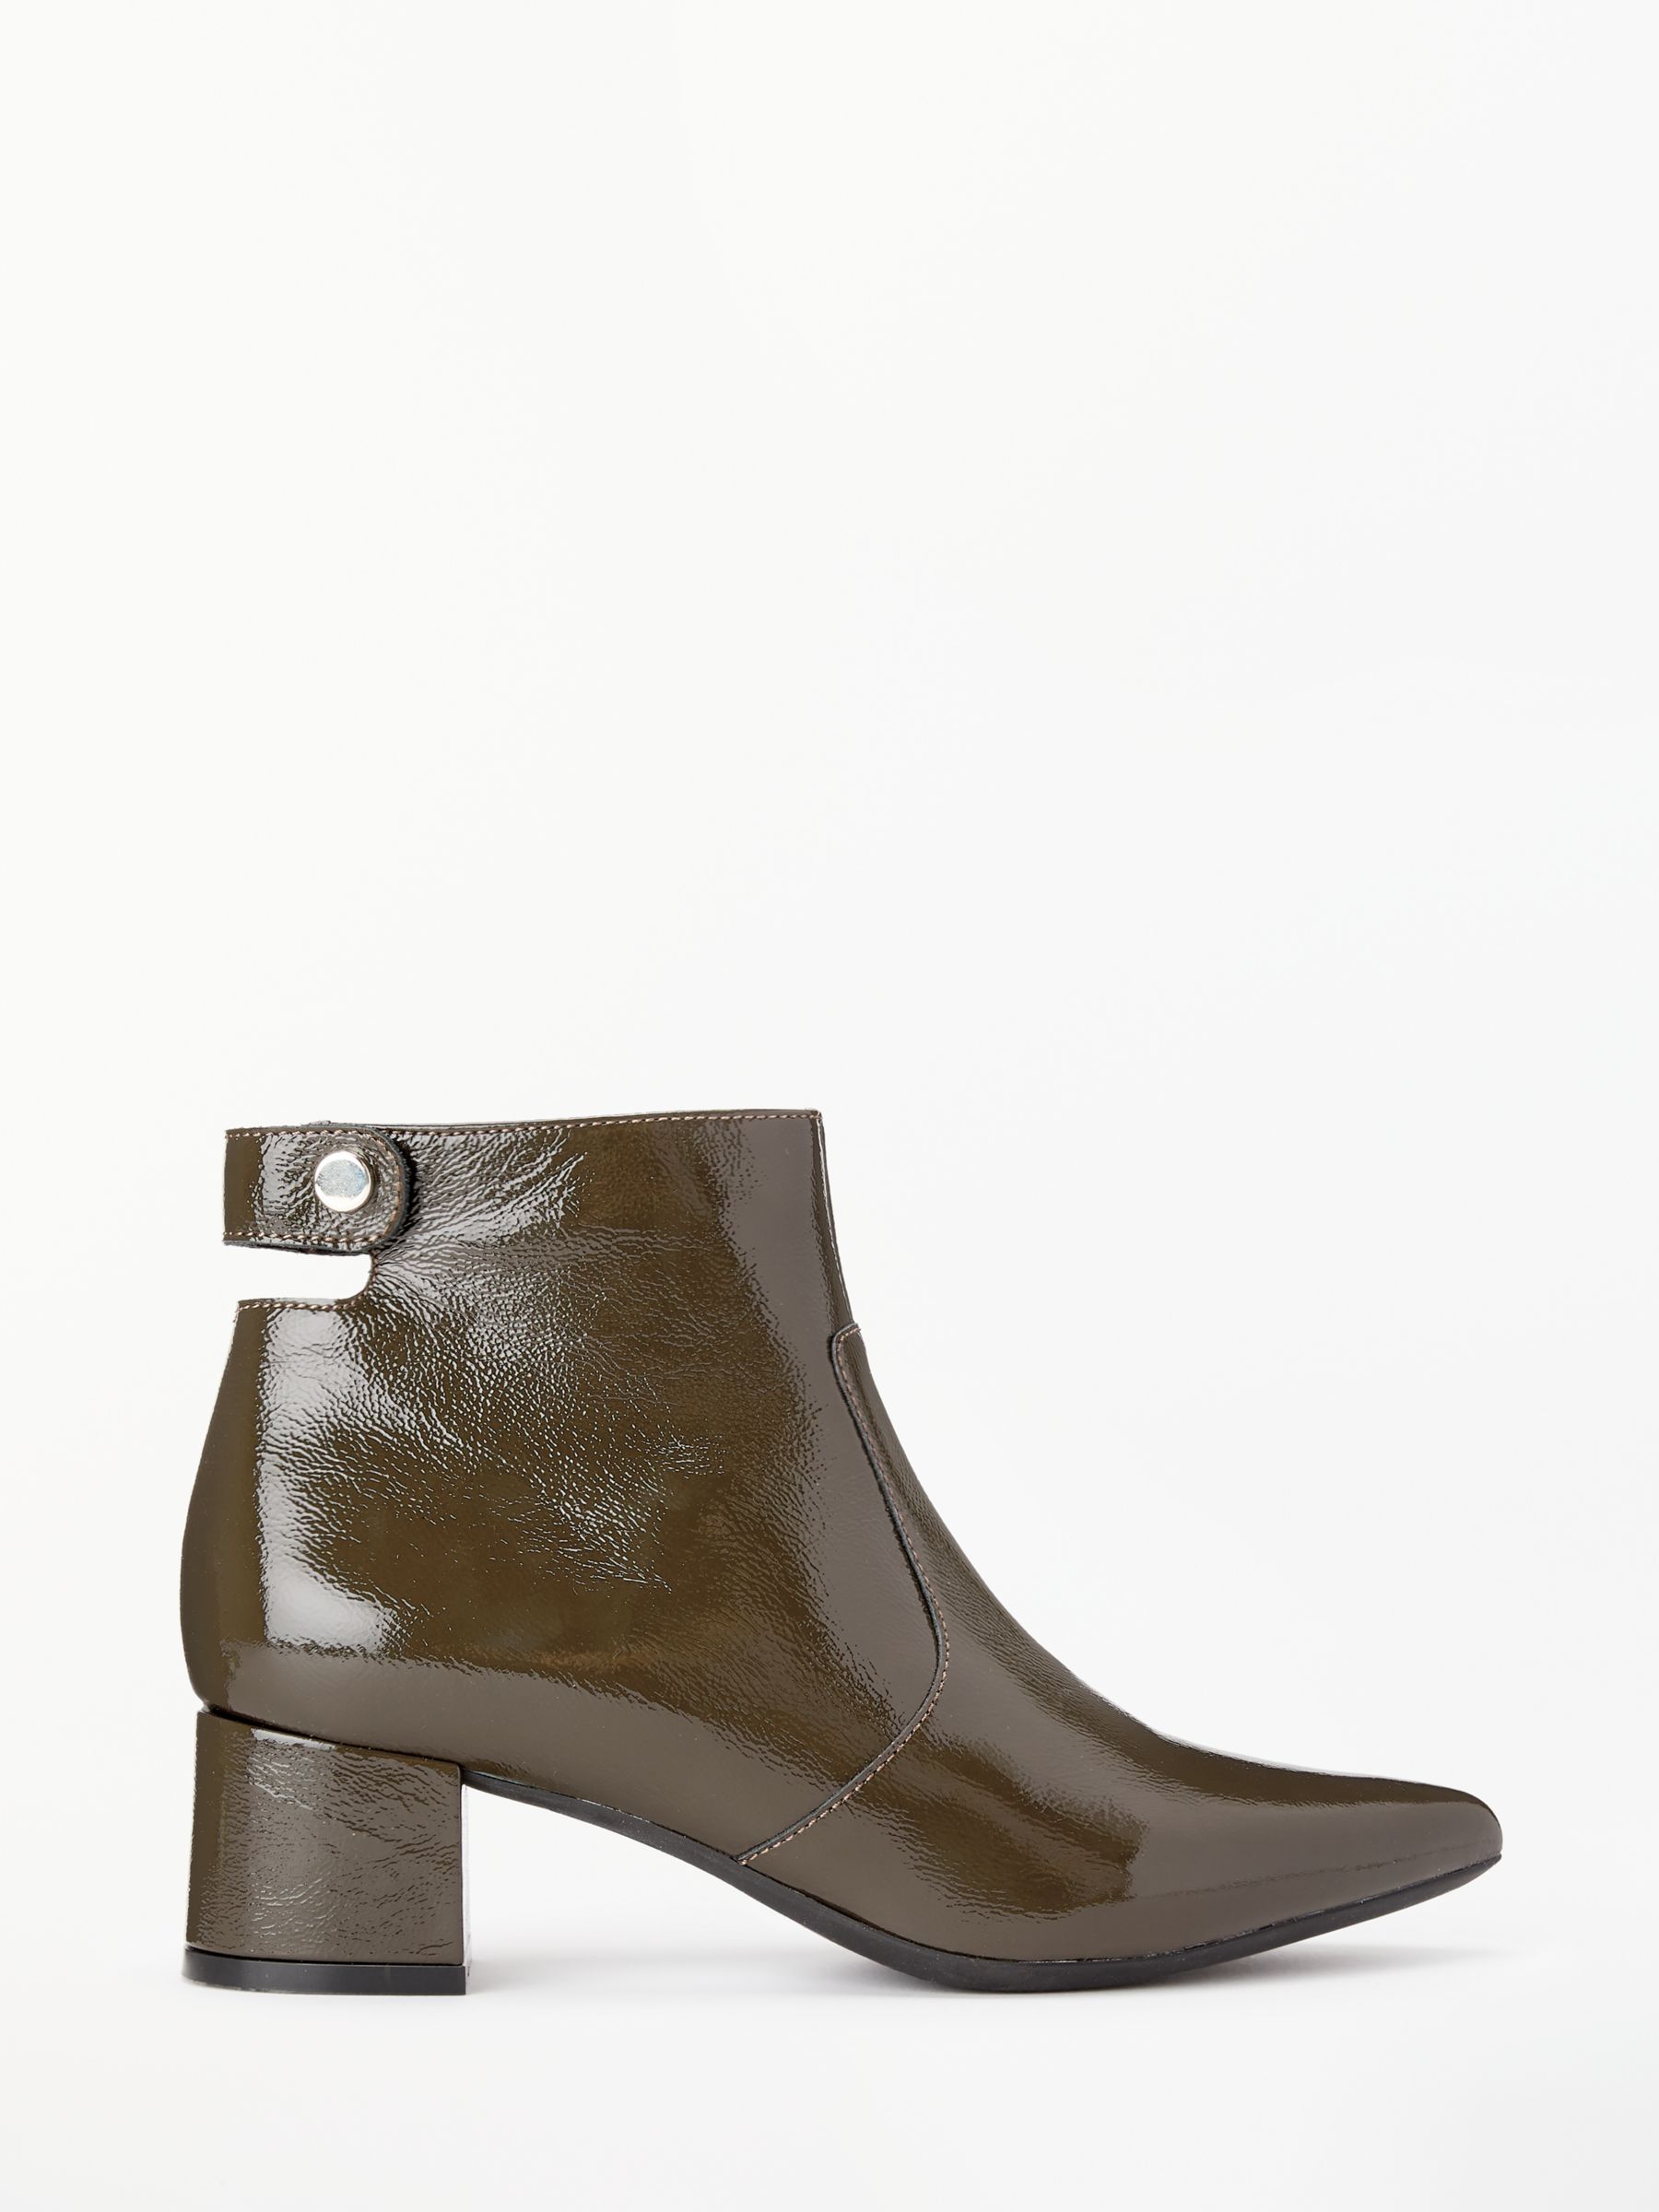 Kin Olavia Patent Leather Boots, Green